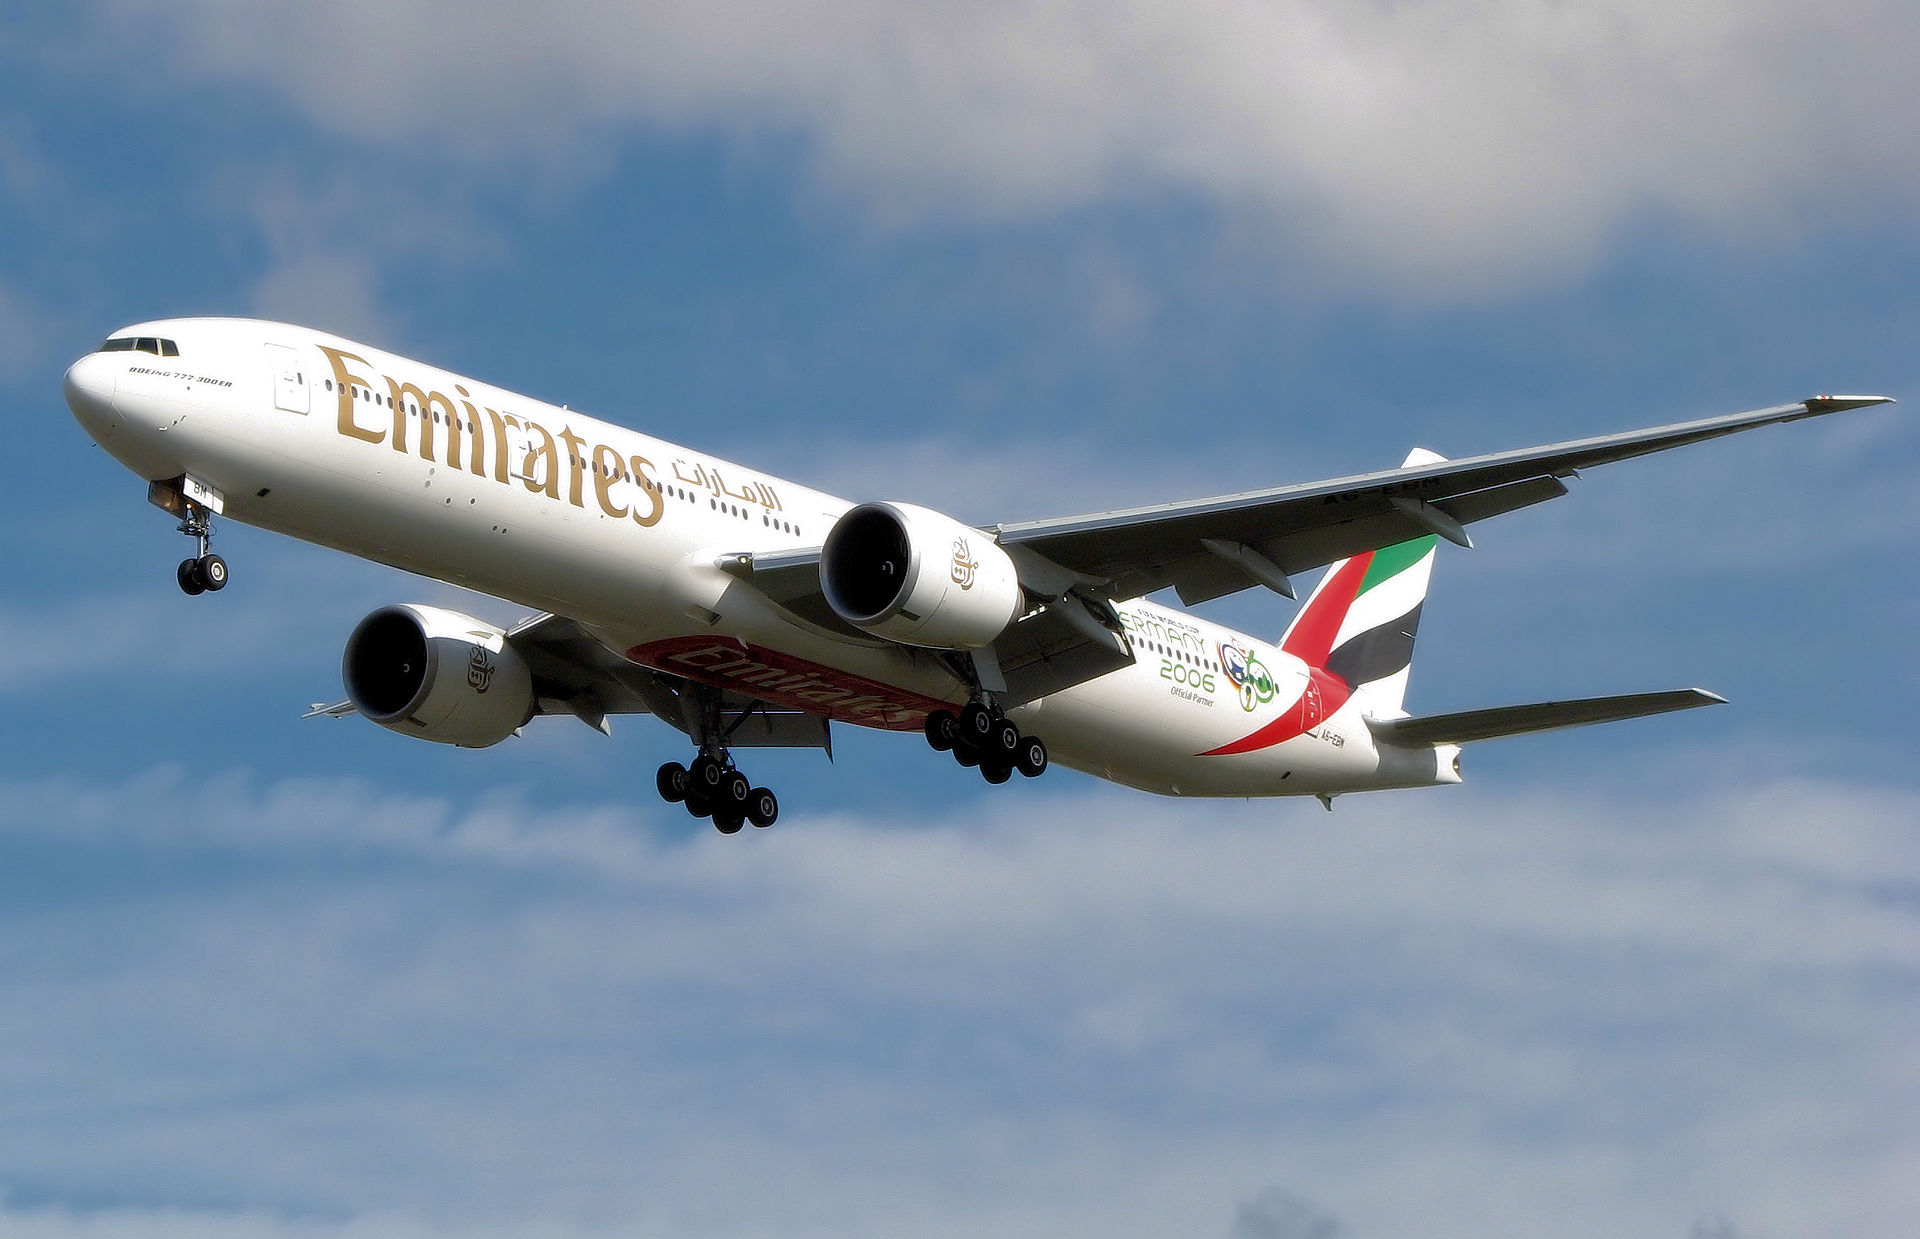 Emirates_b777-300er_a6-ebm_arp.jpg